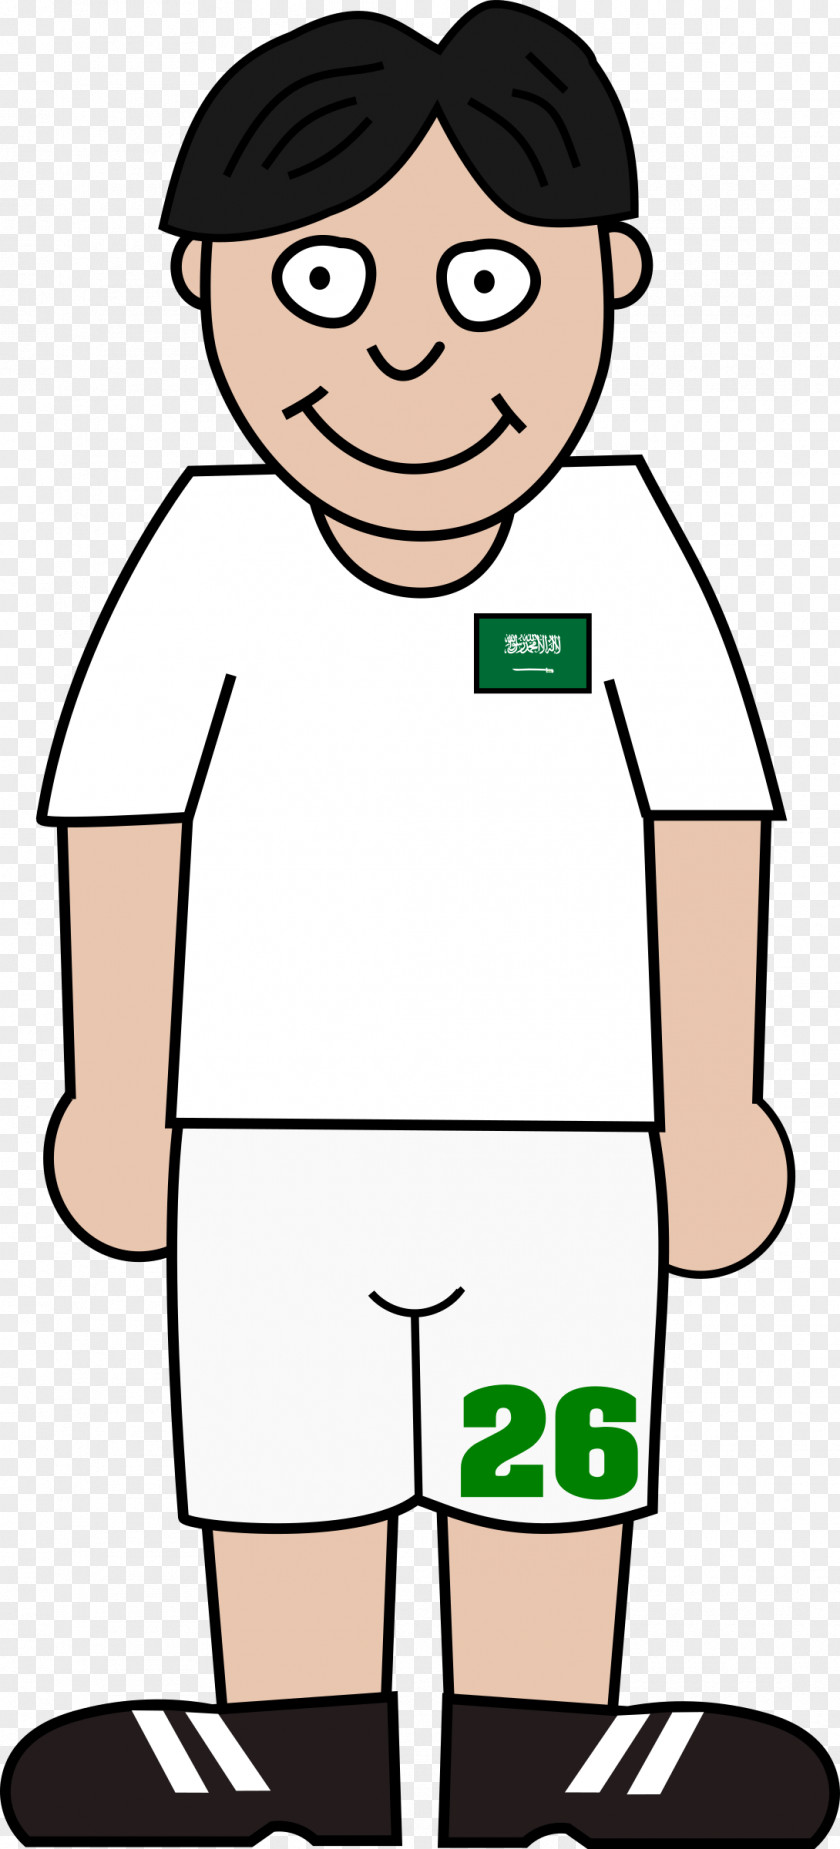 Saudi Arabia Football Jakub Błaszczykowski Soccer Player Clip Art PNG